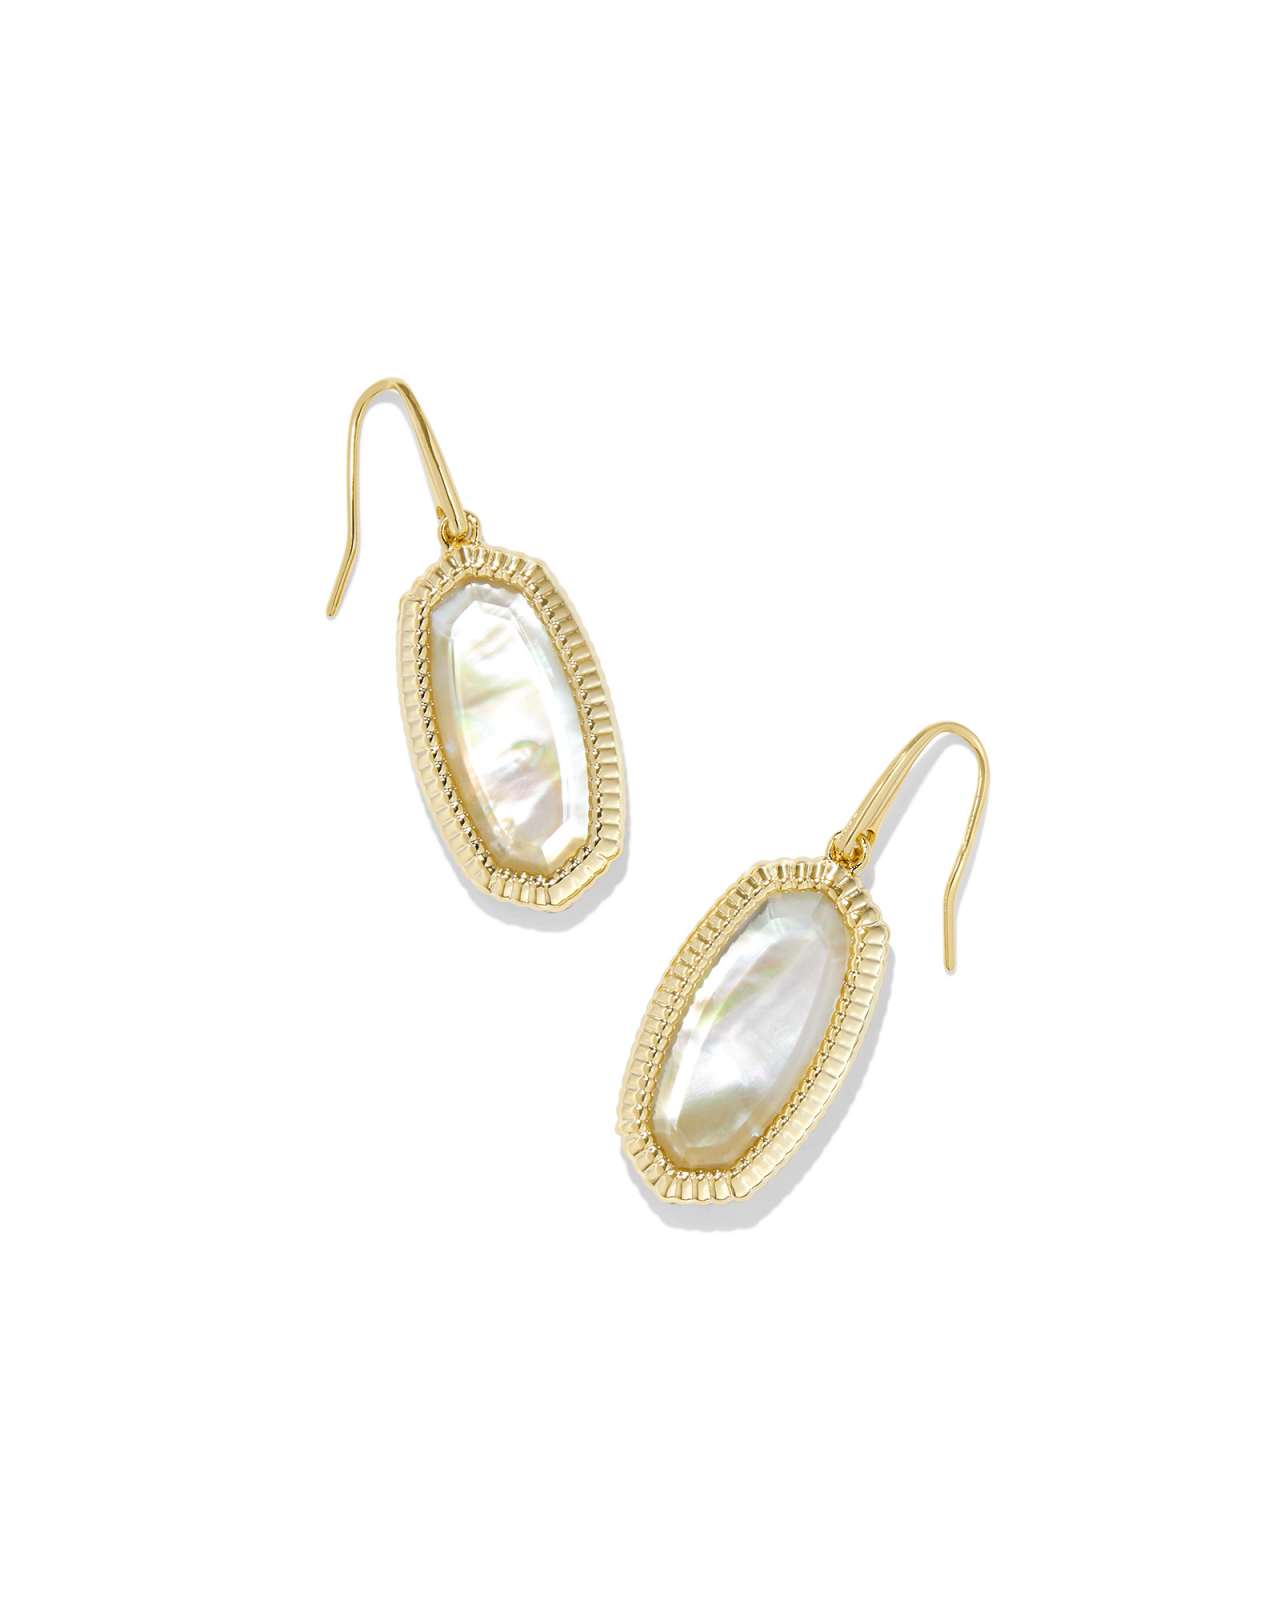 Dani Gold Ridge Frame Drop Earrings in Azalea Illusion | Kendra Scott | Kendra Scott